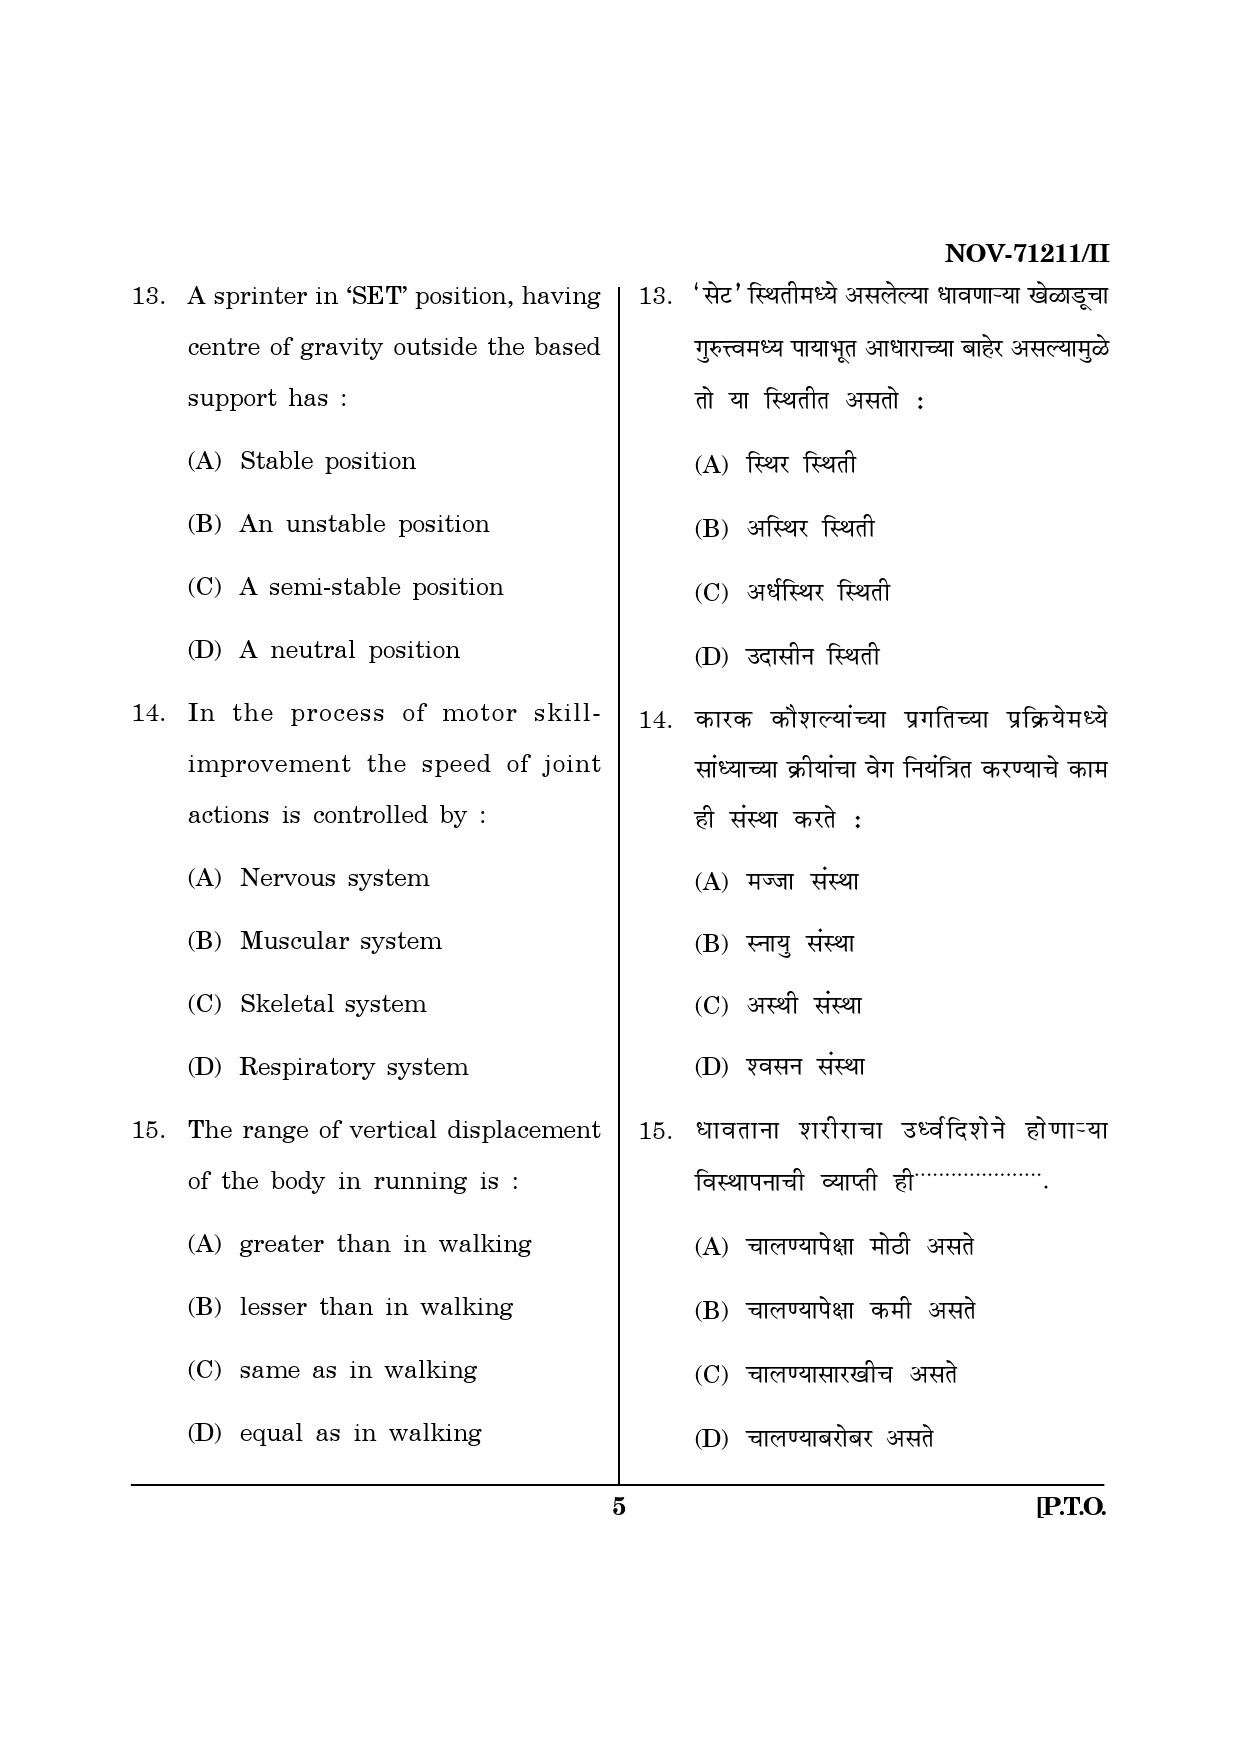 Maharashtra SET Physical Education Question Paper II November 2011 5